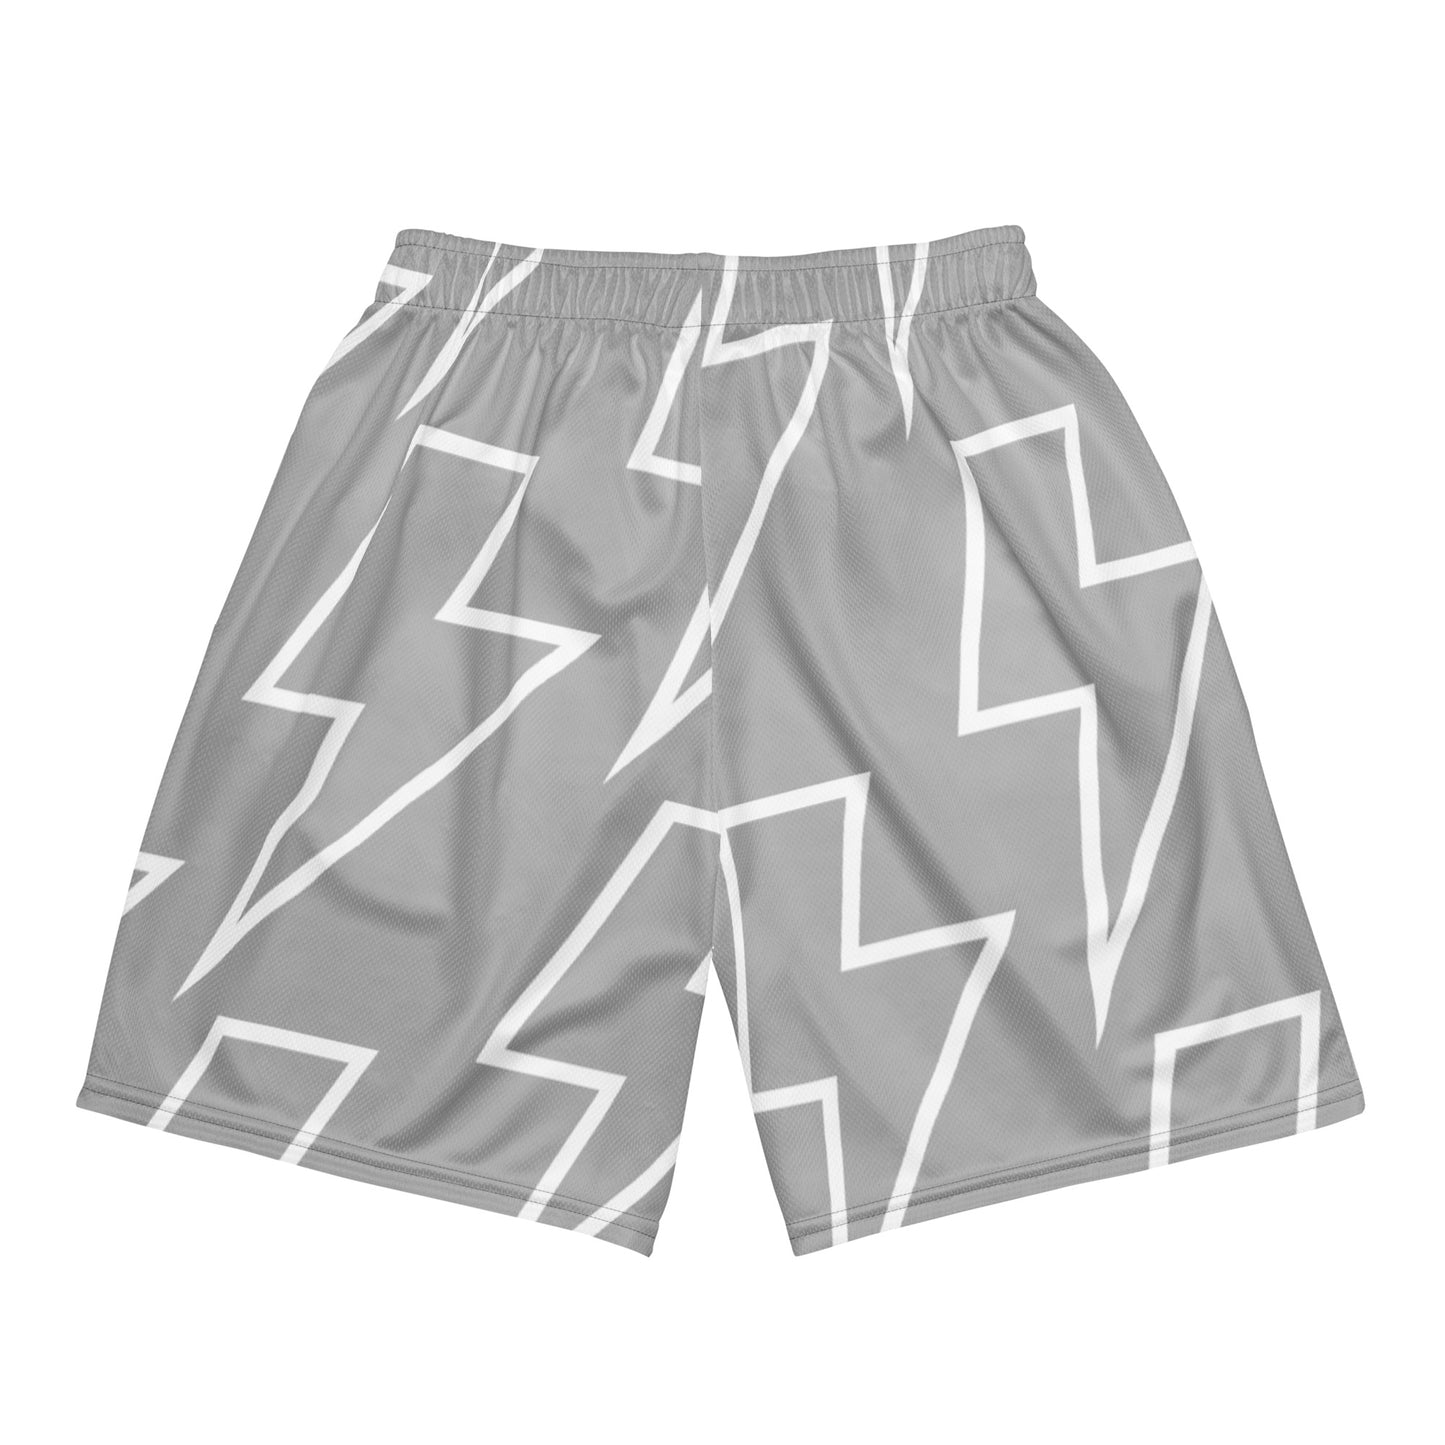 Fearless mesh shorts 4